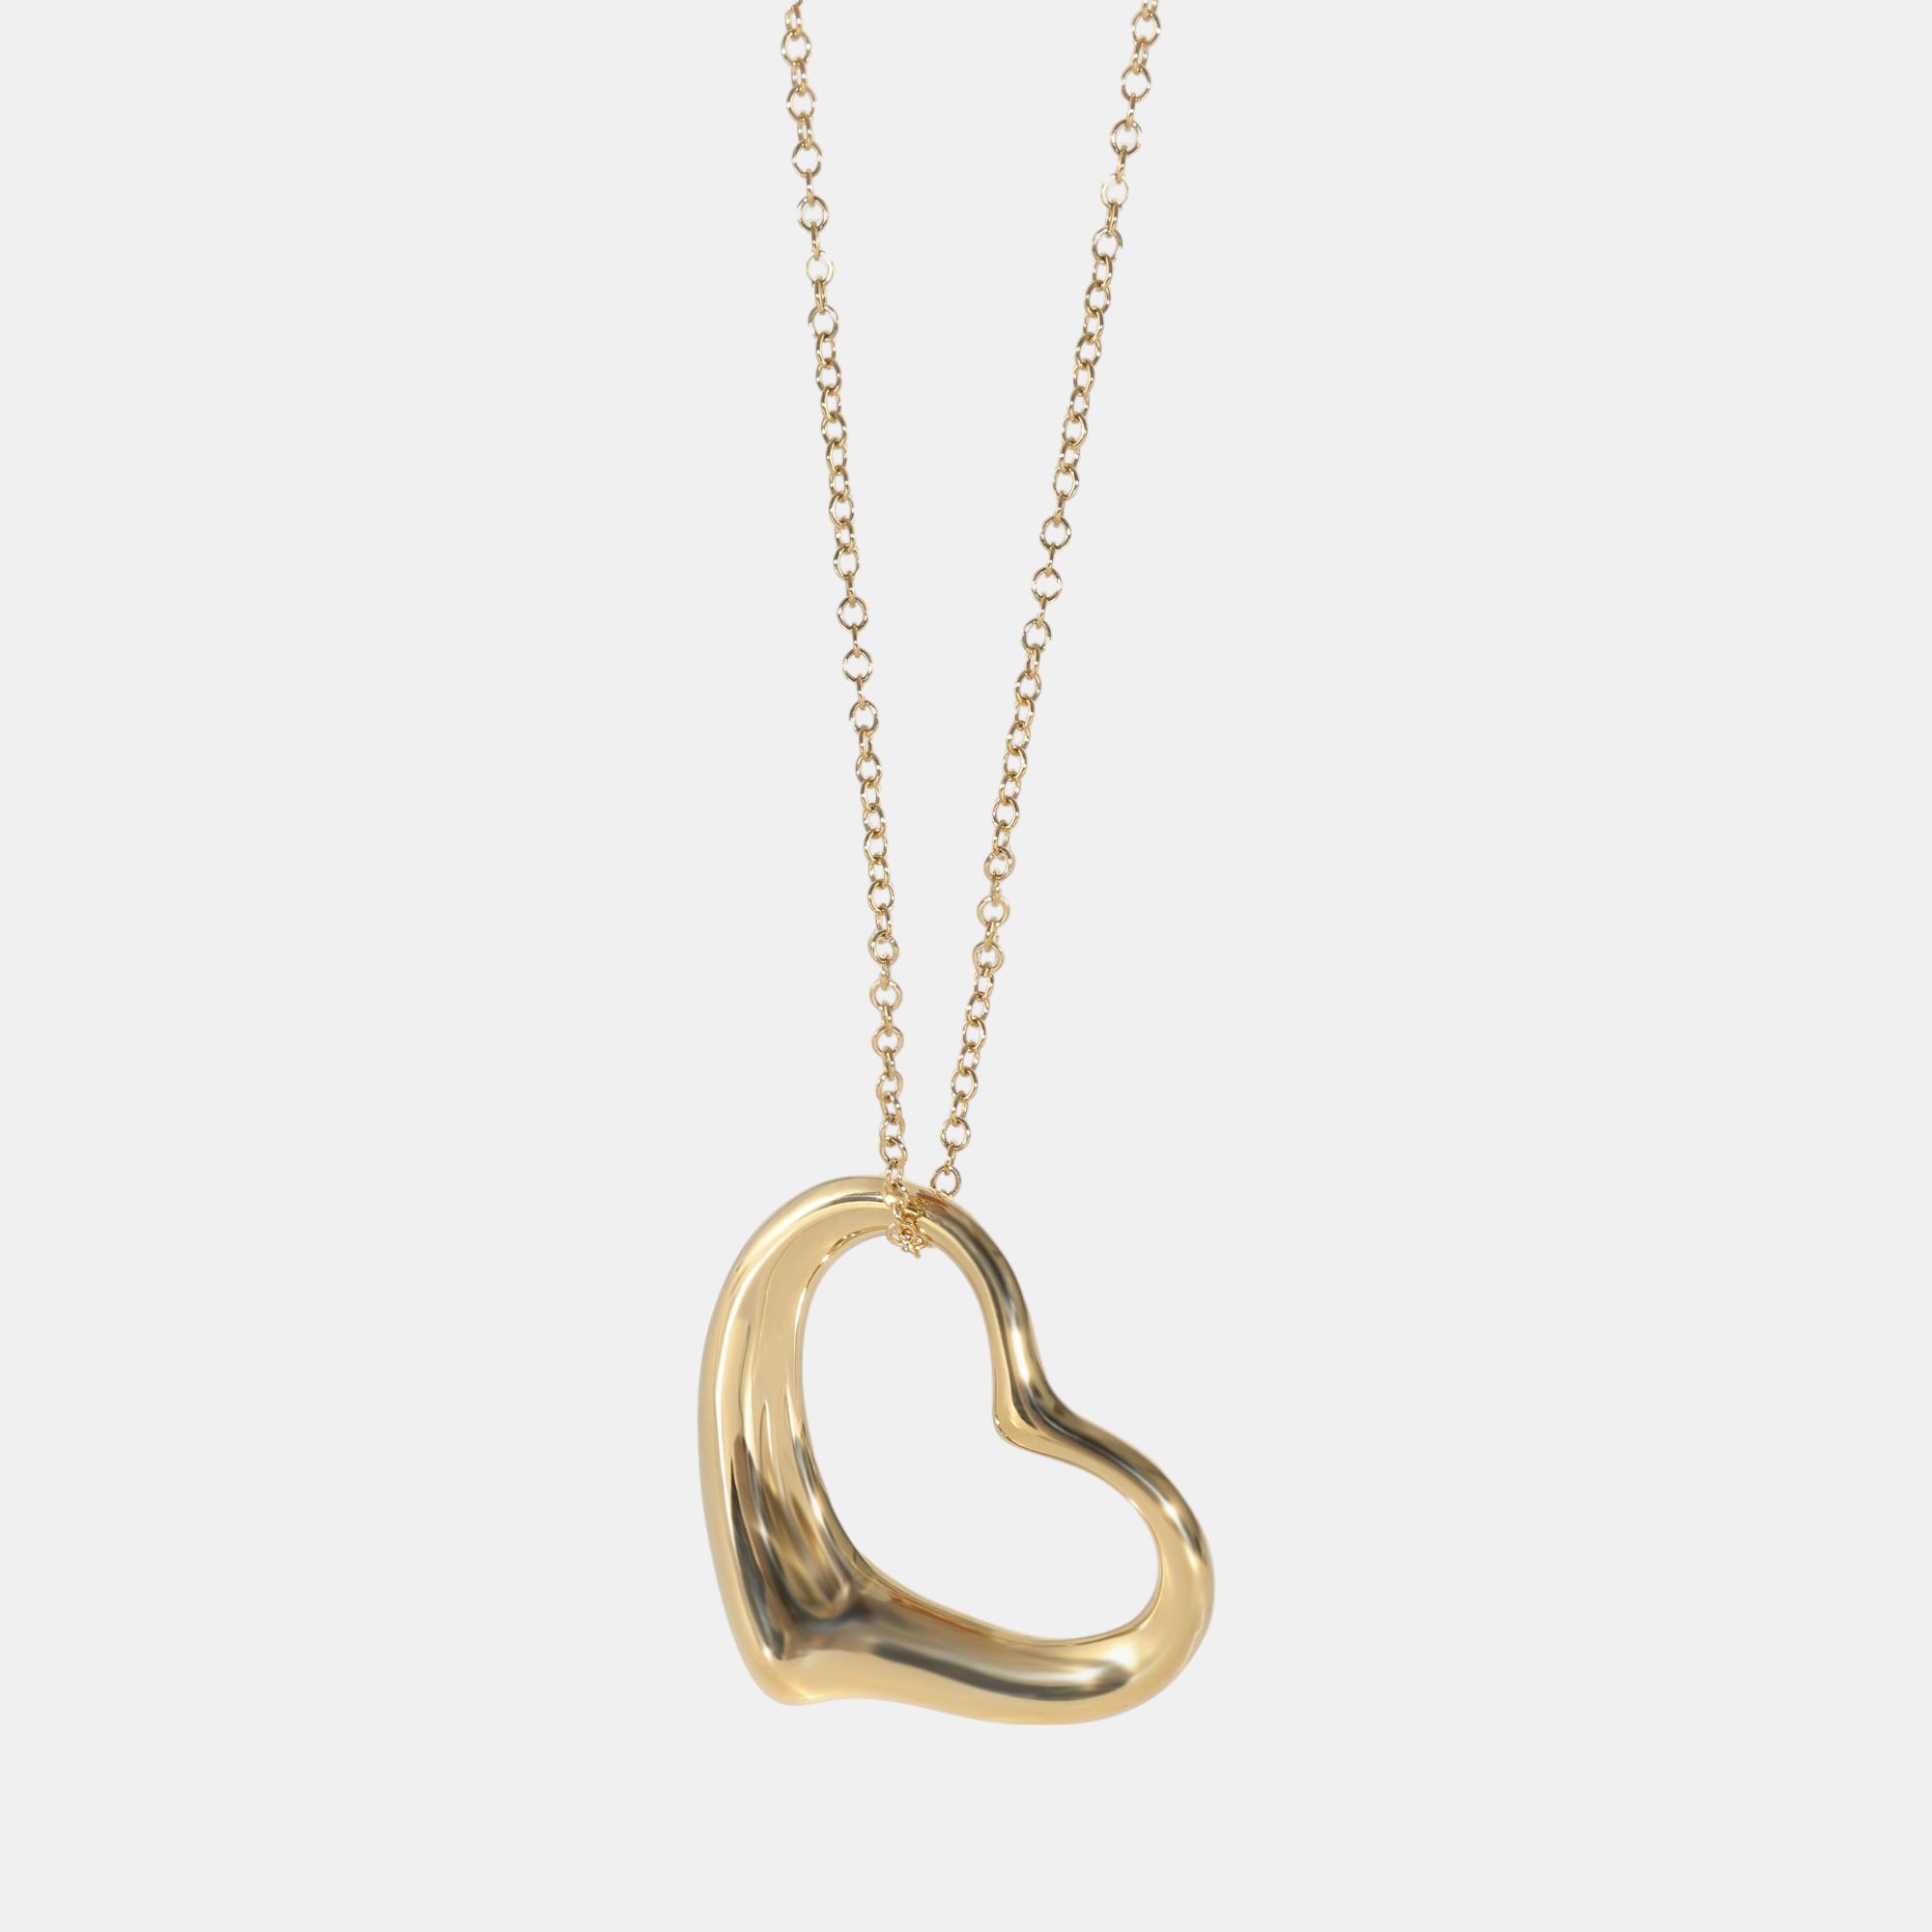 Tiffany & co. elsa peretti open heart pendant in 18k yellow gold